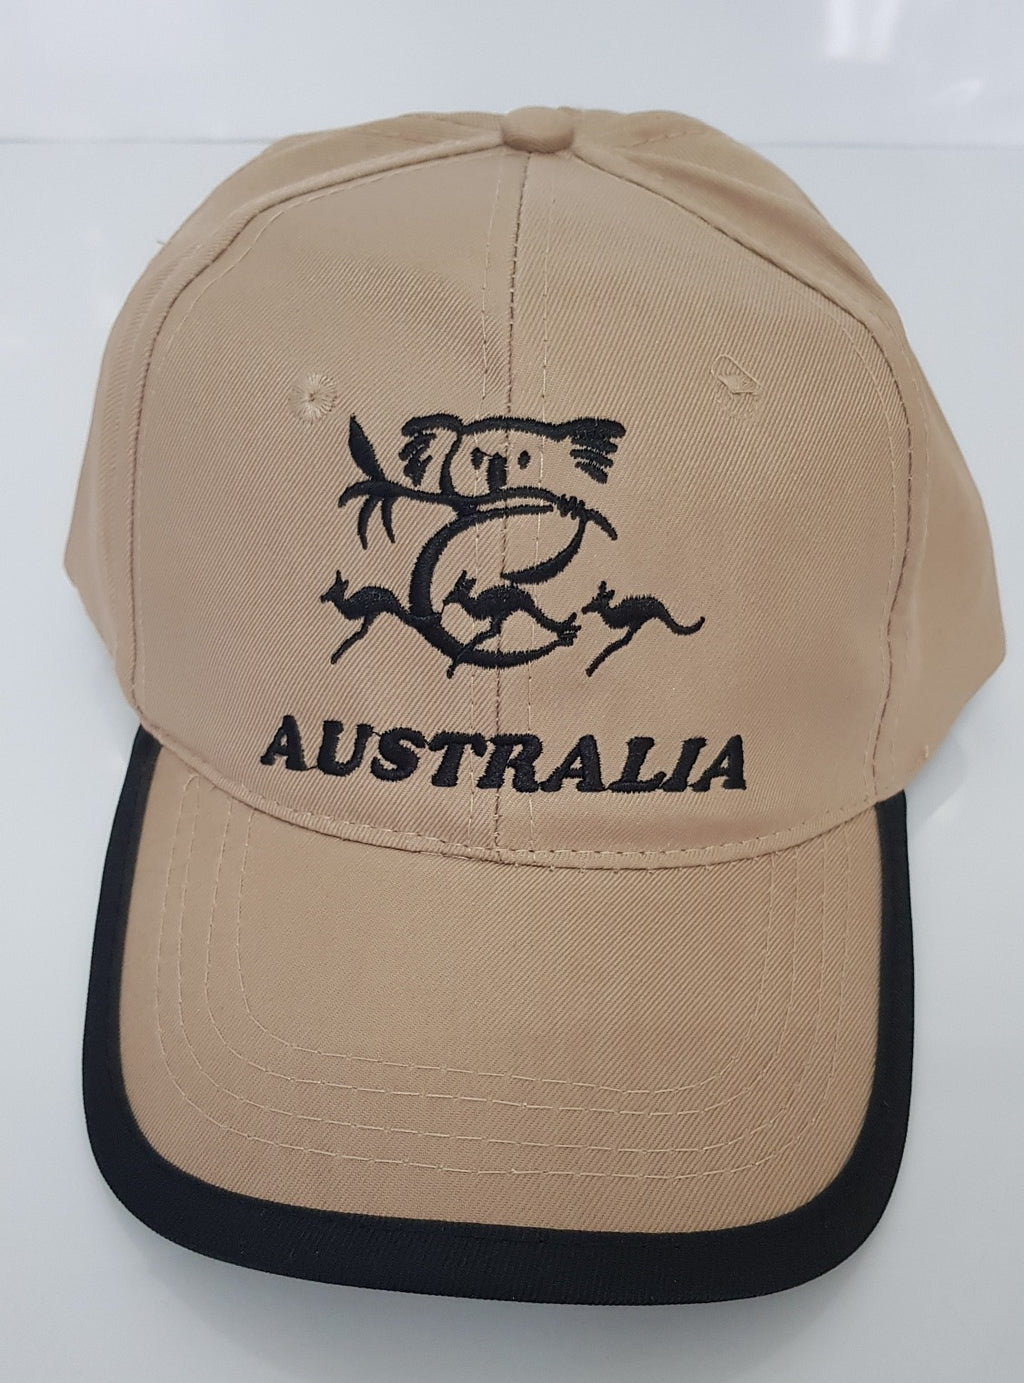 UNISEX MEN'S LADIES AUSTRALIAN SOUVENIR CAPS HATS EMBROIDERED BEIGH & BLACK KOALA & KANGAROO